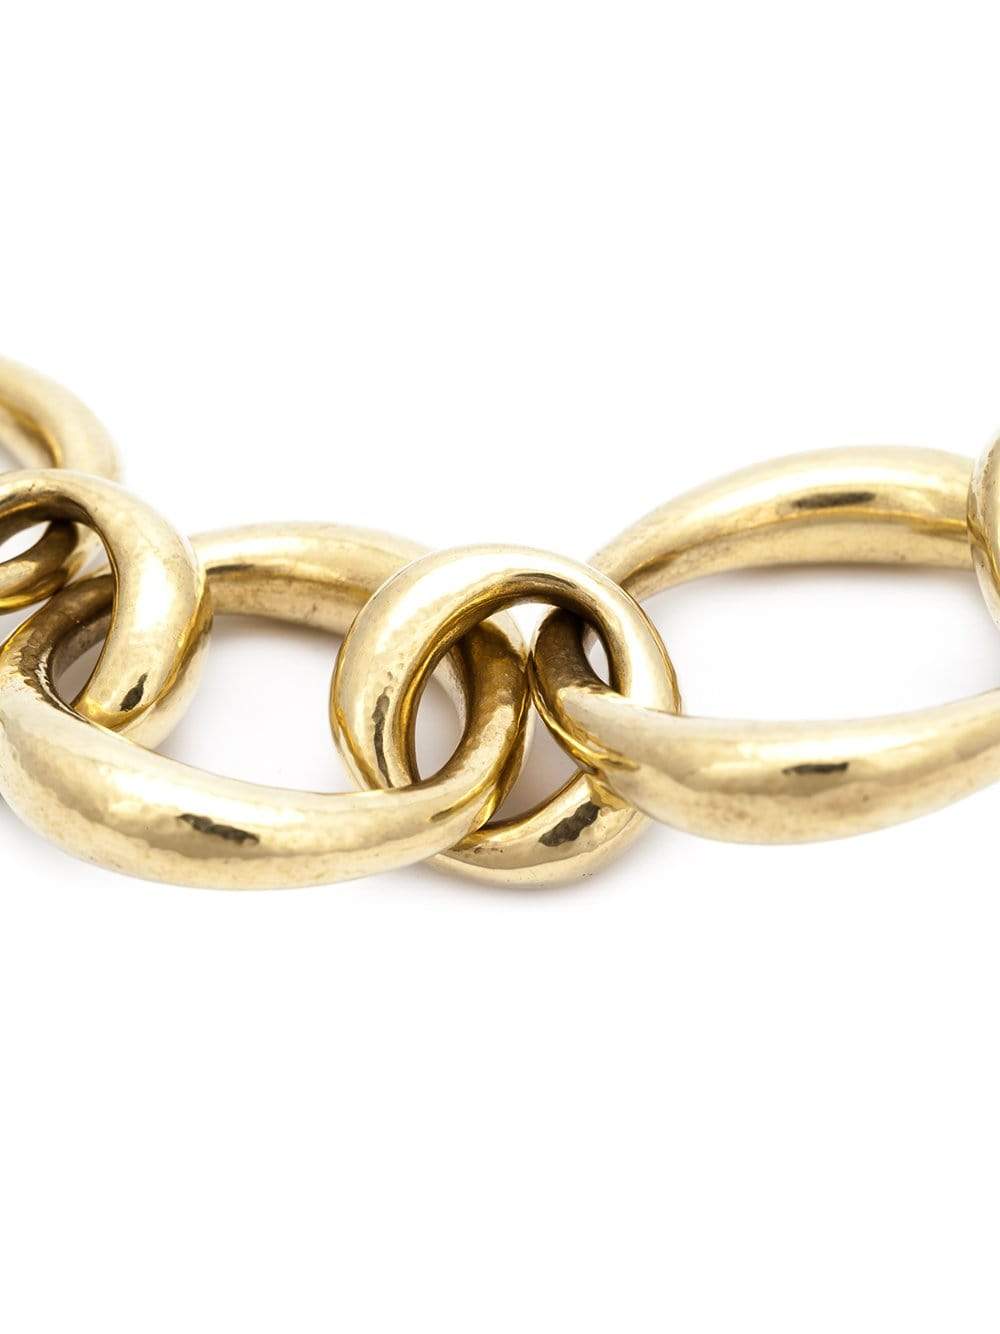 VAUBEL-Chunky Oval Link Necklace-GOLD